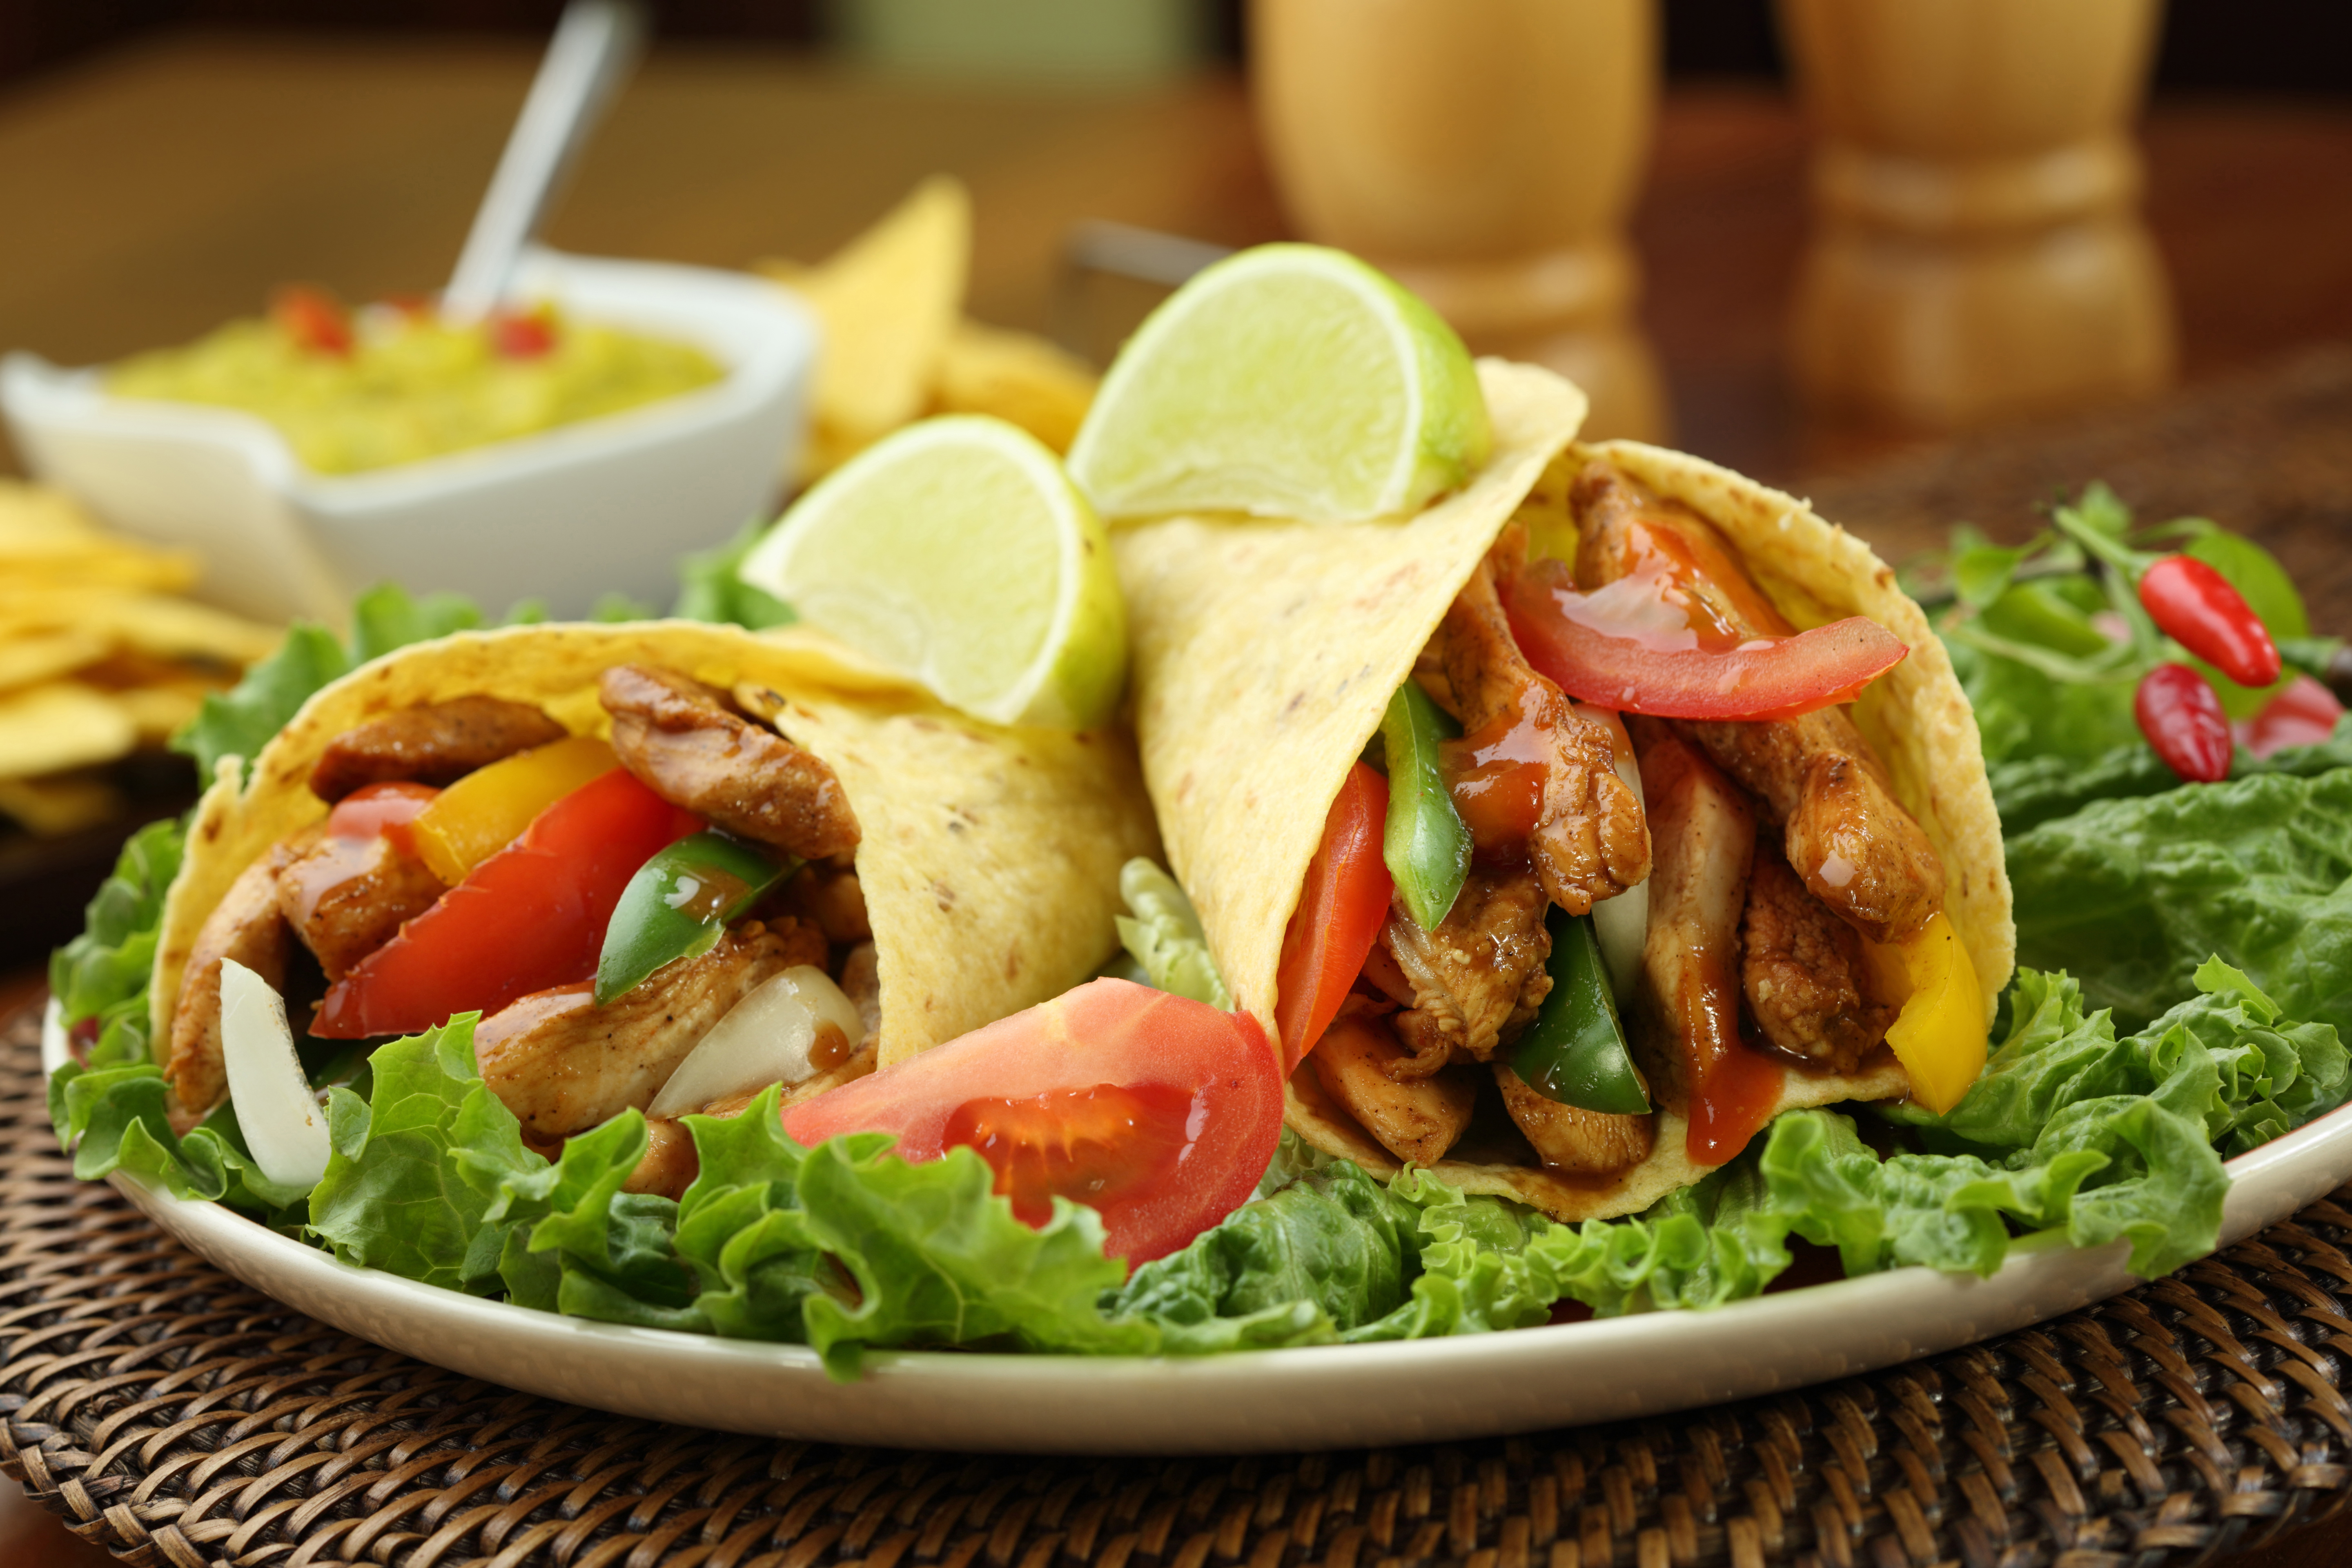 chicken fajita  with guacamole and tortillas – dish of mexico